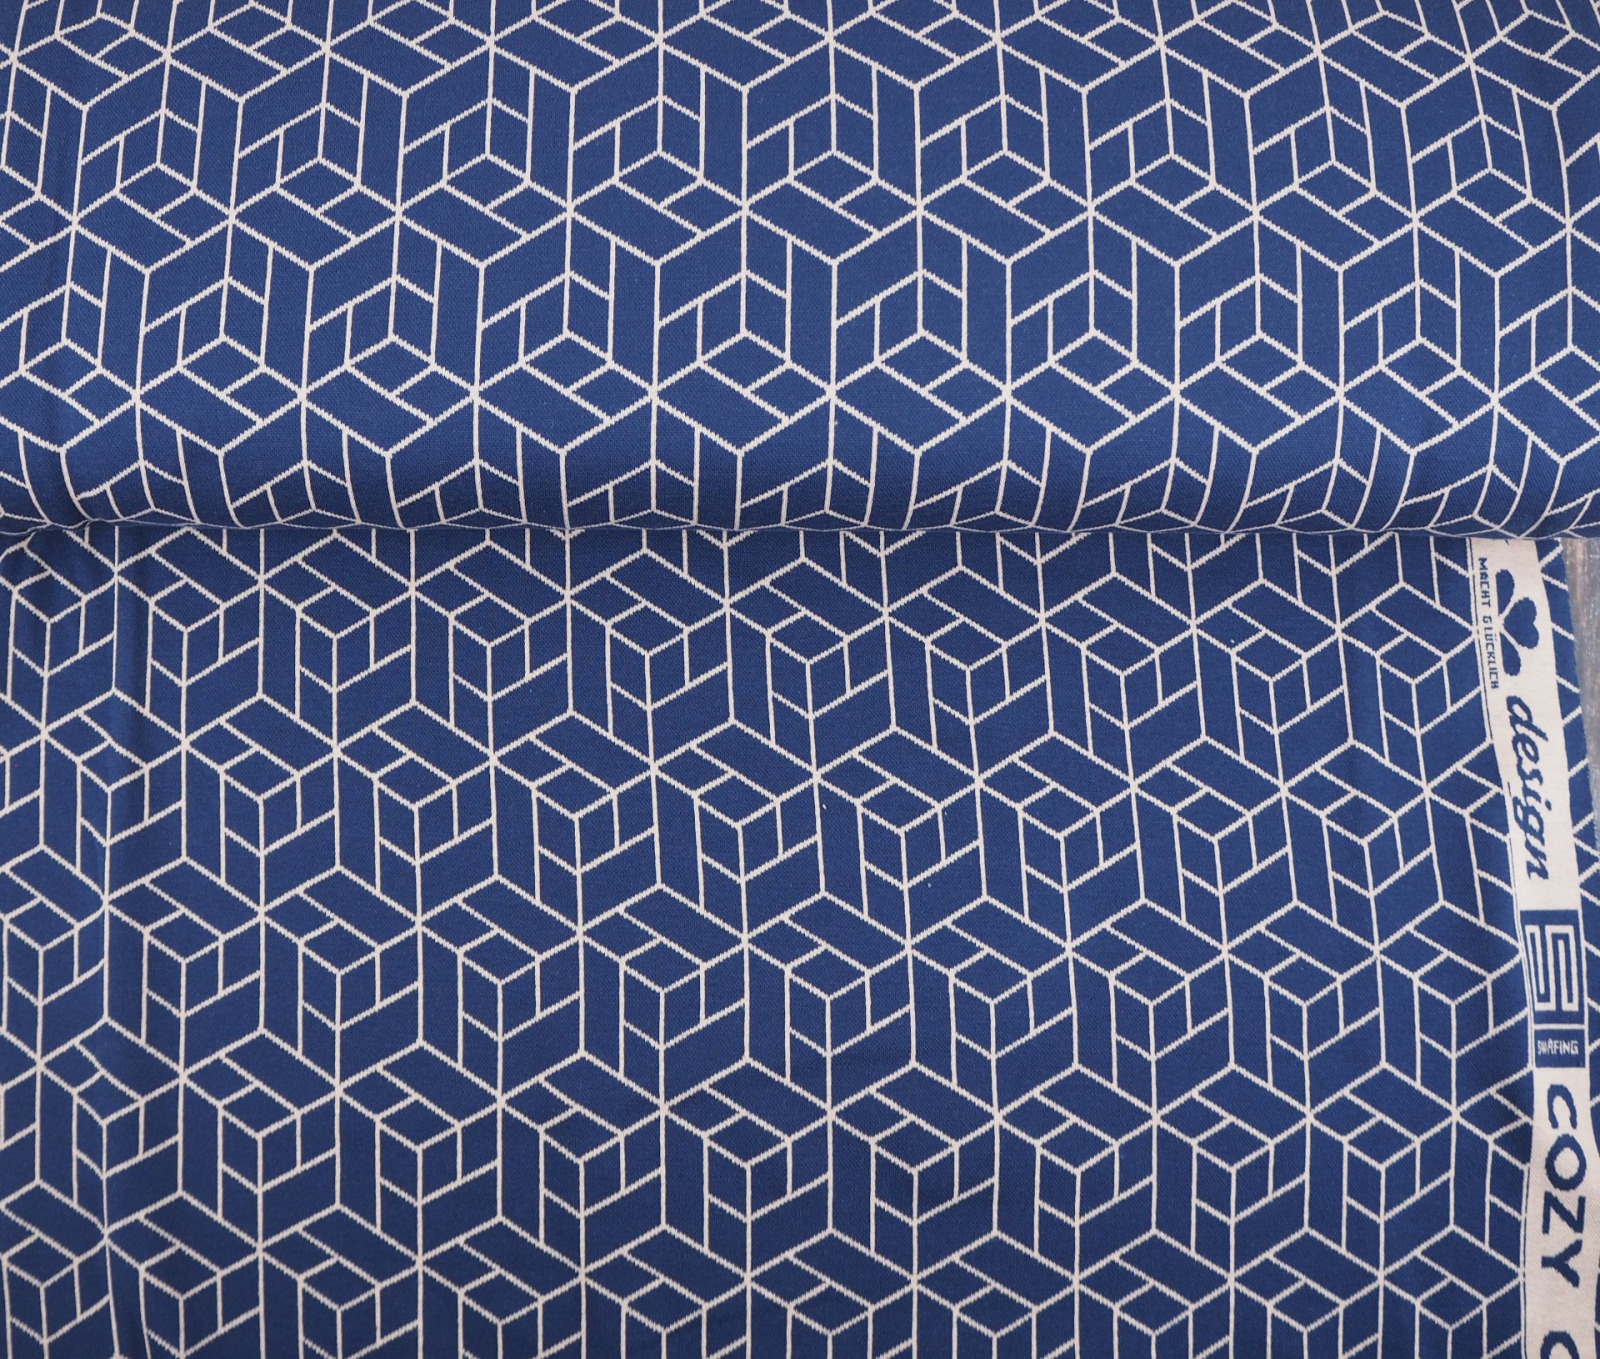 Jaquardstrick 1596/m Cozy Collection by lycklig design Swafing blau geometrisches Muster Damenstoffe Meterware 4